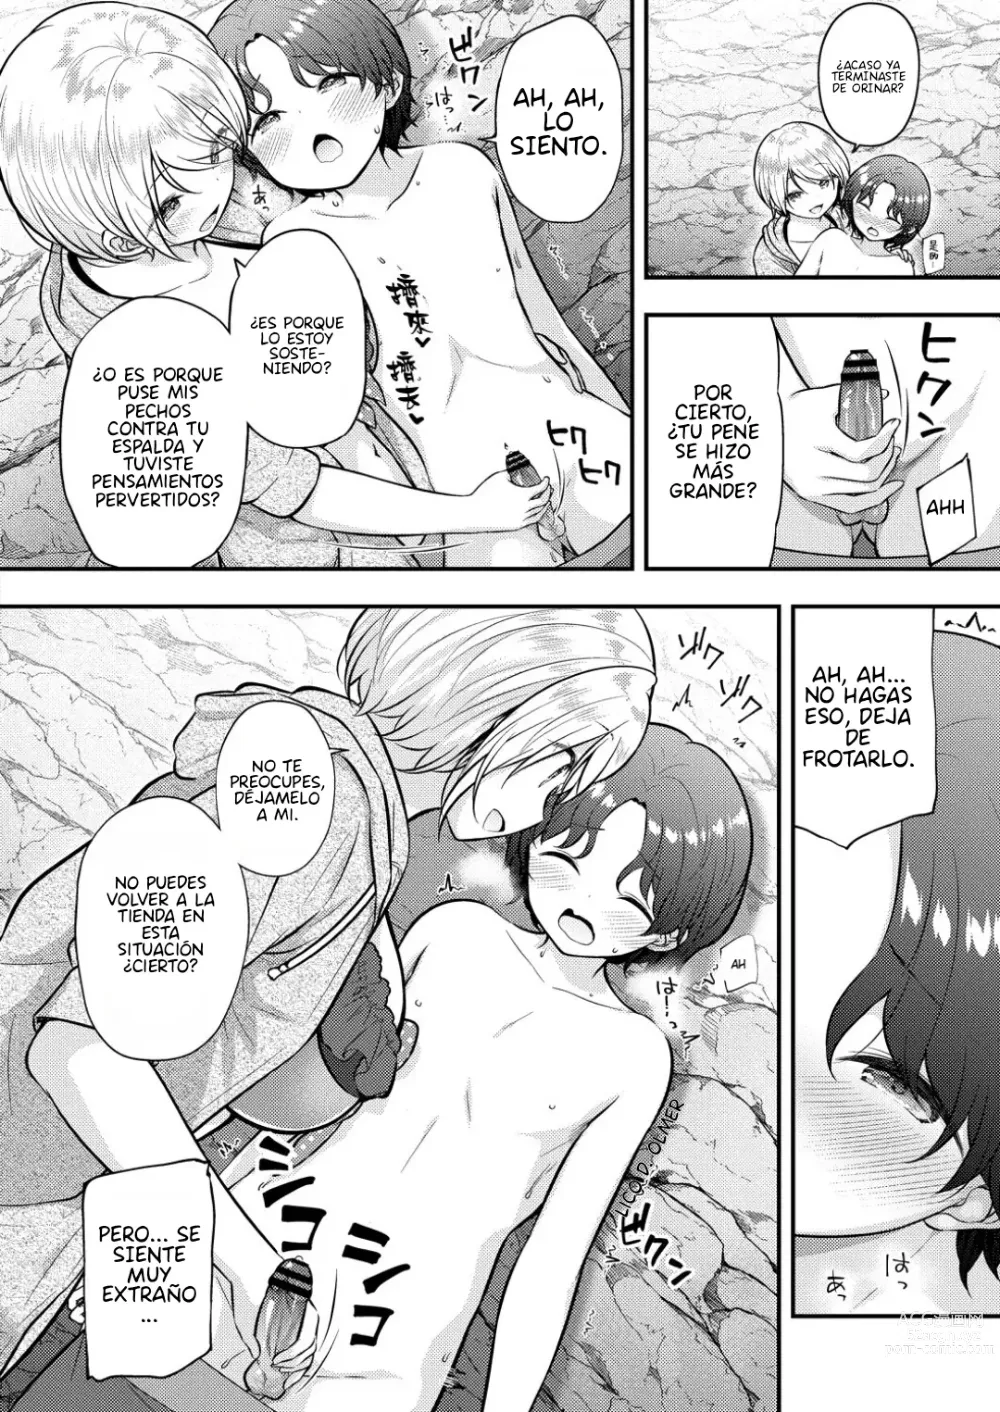 Page 6 of manga Una aventura de Verano.